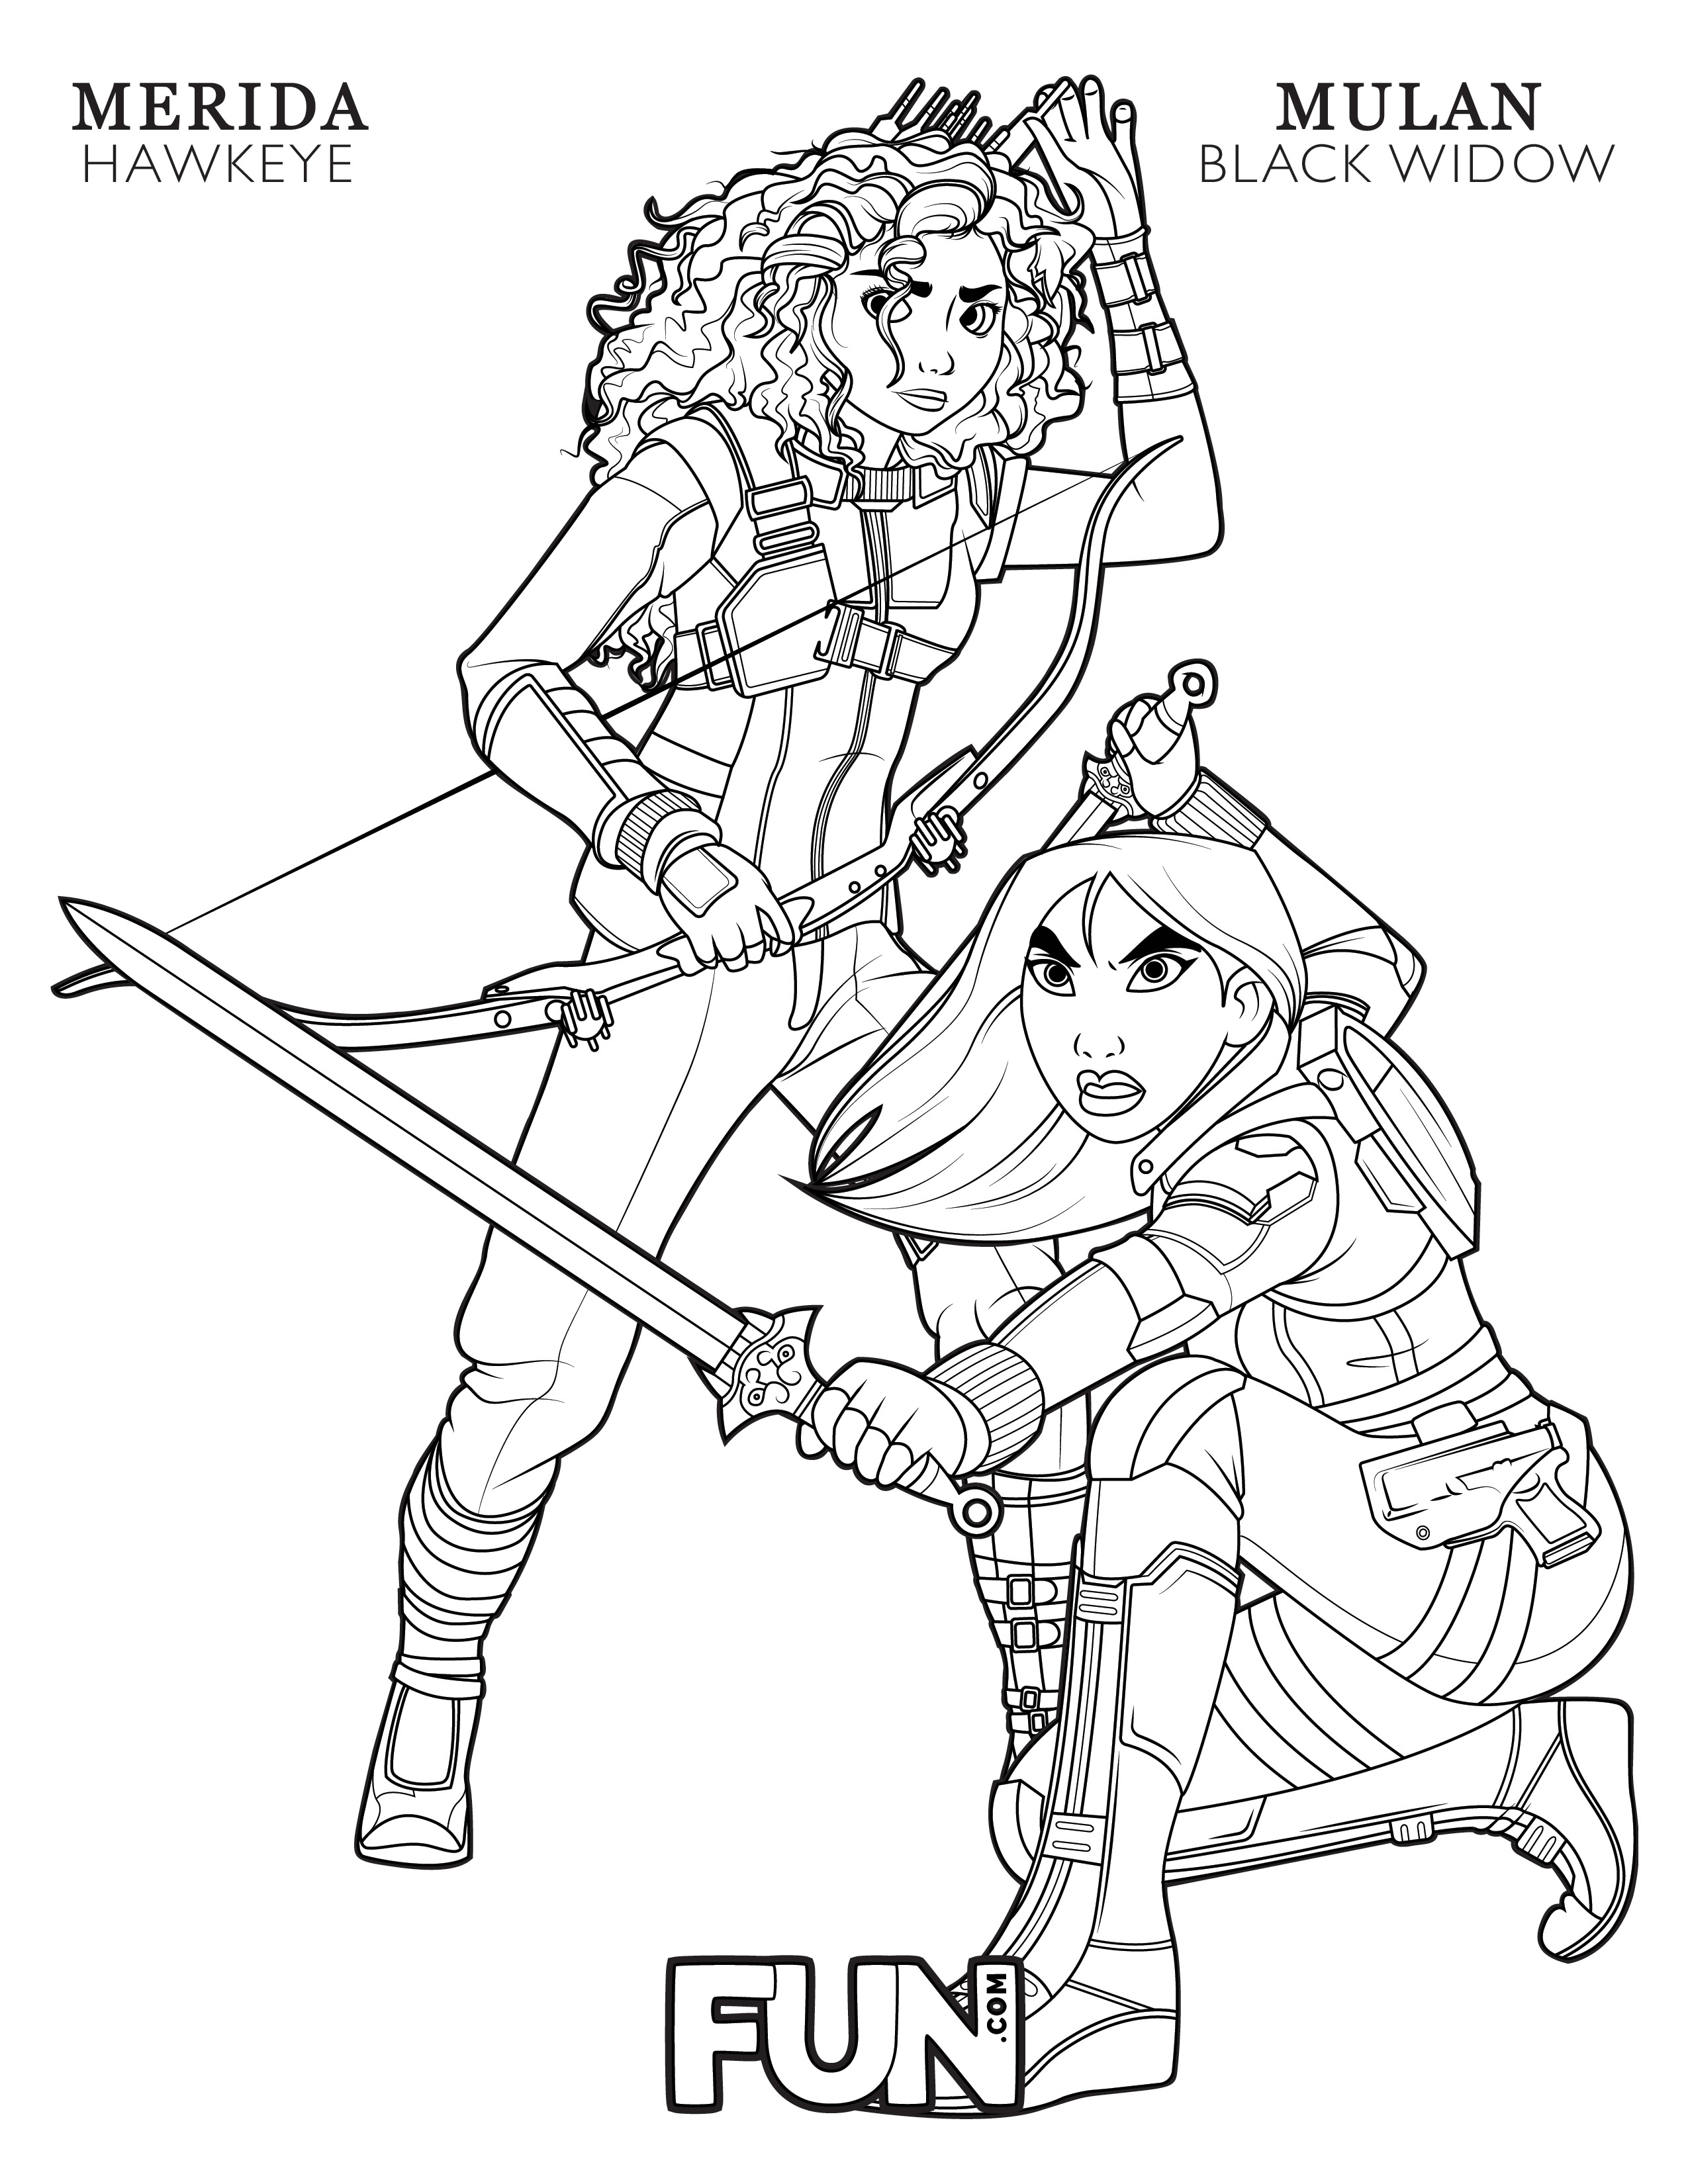 Merida Hawkeye and Mulan Black Widow Coloring Page